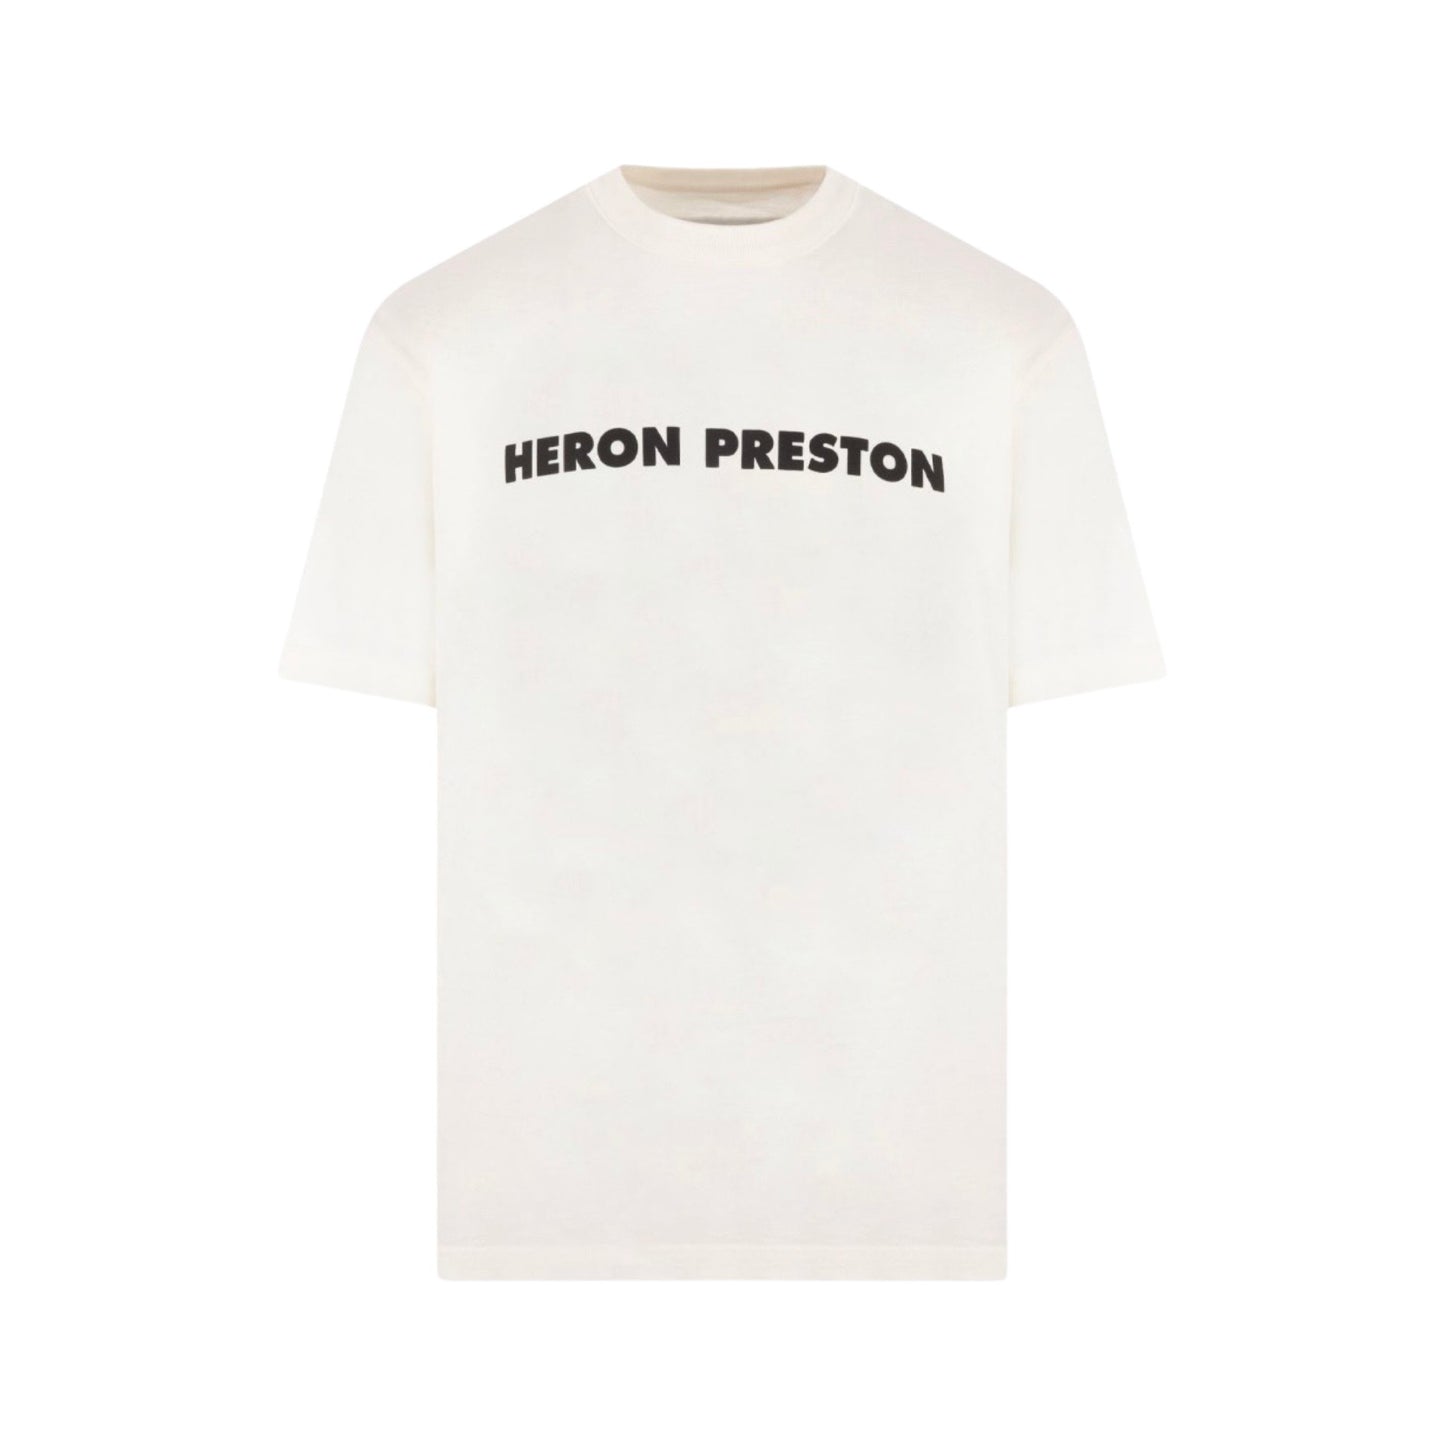 Heron Preston 'This Is Not' print T-shirt White